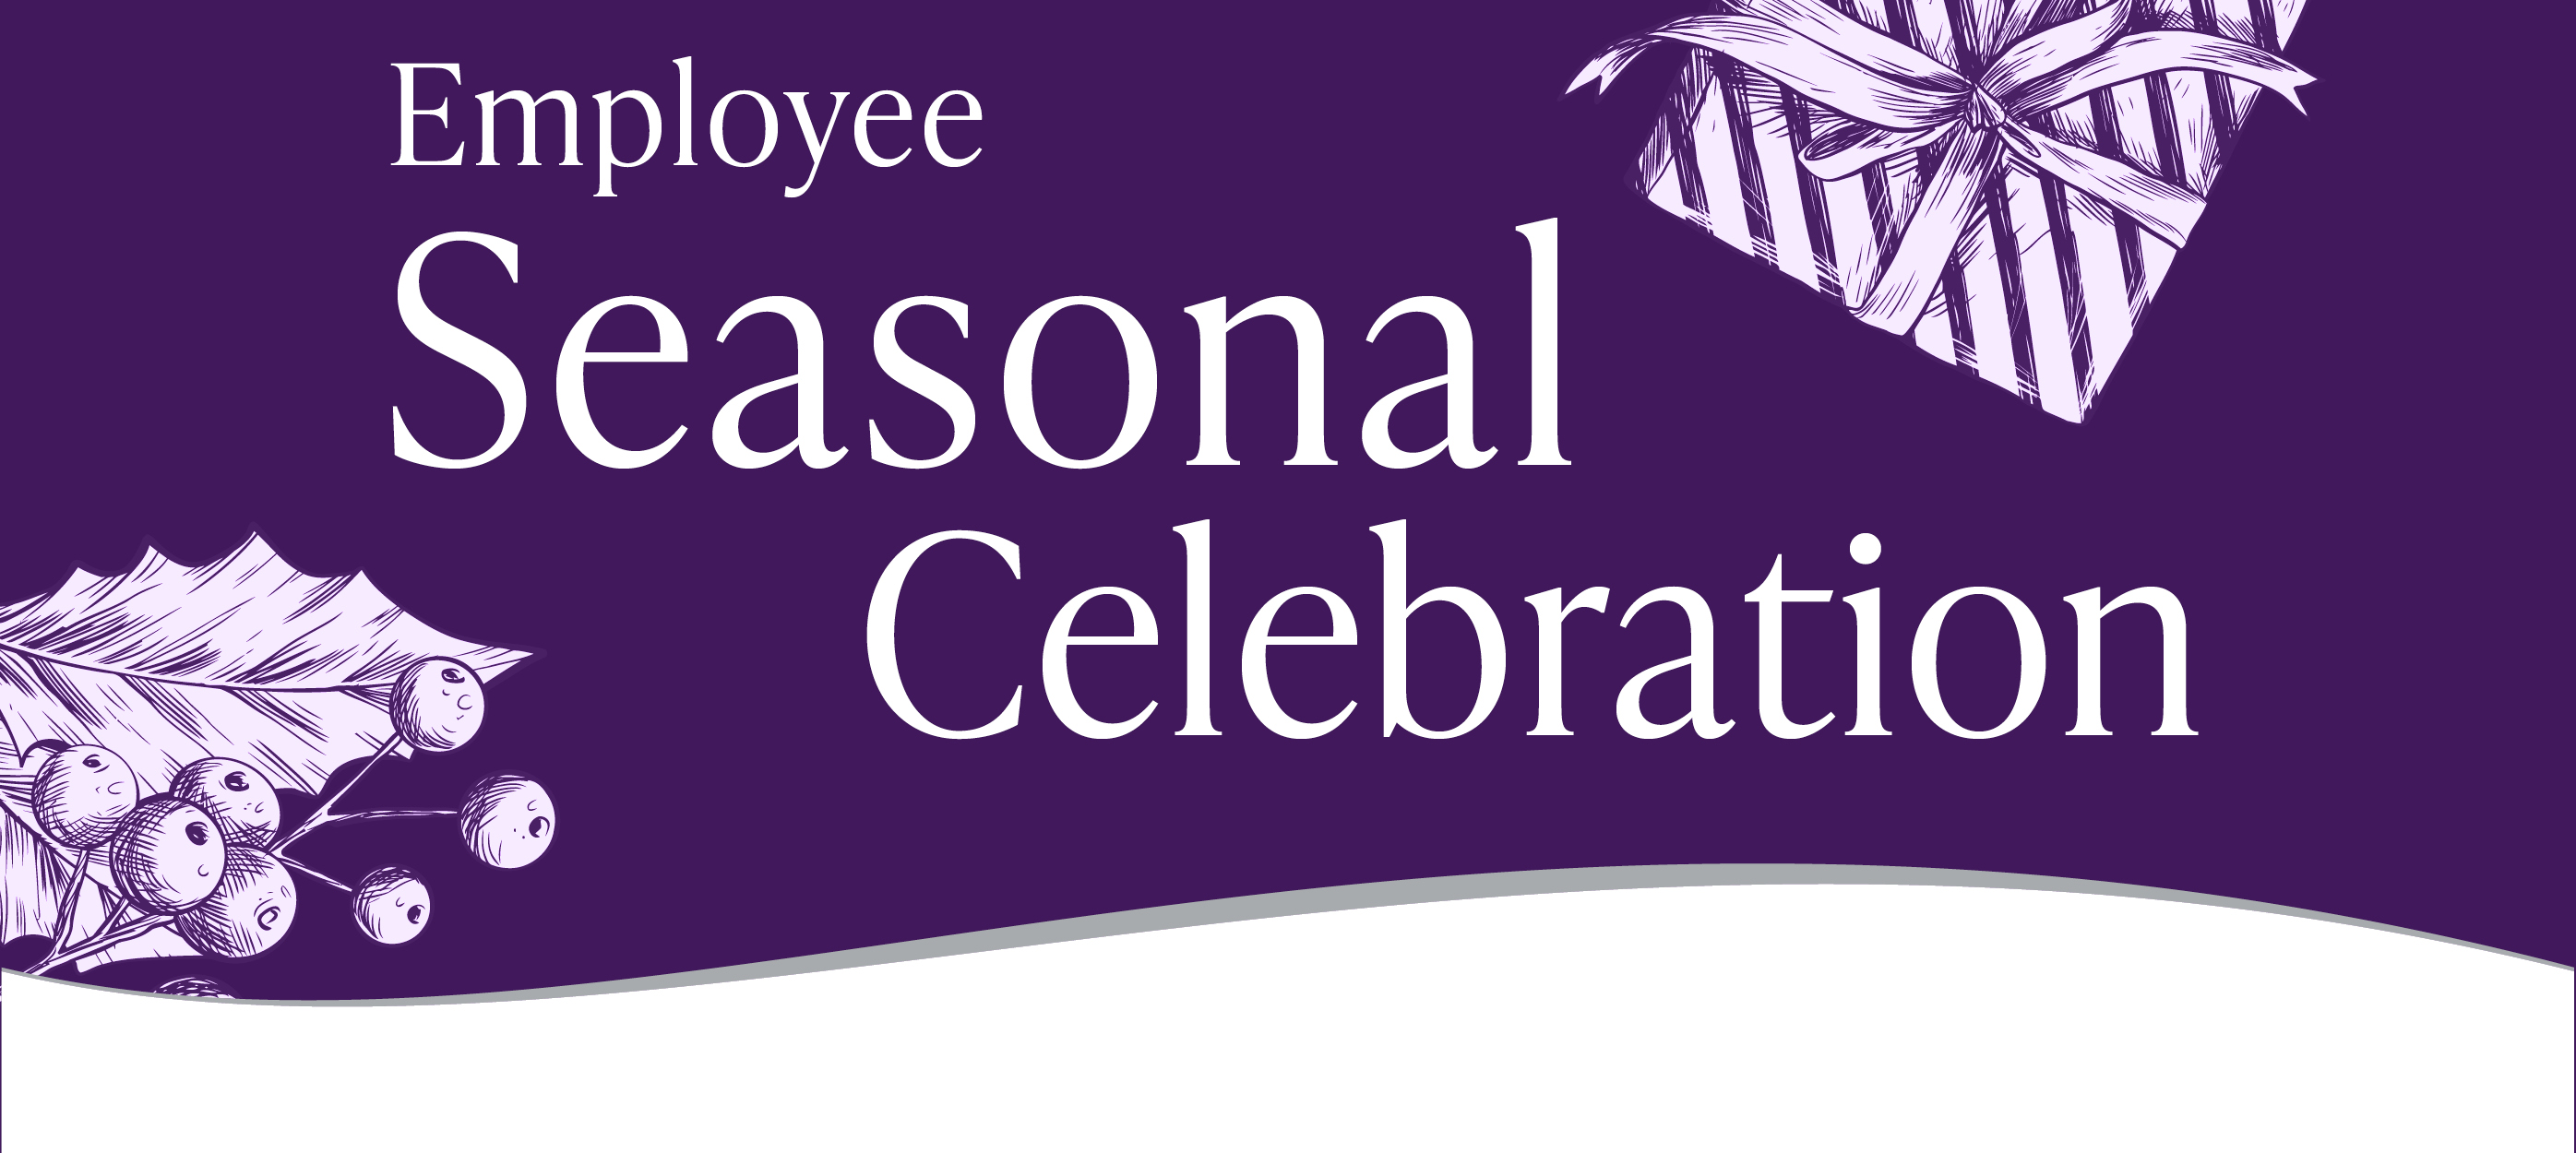 Employee Seasonal Celebration on a purple background.